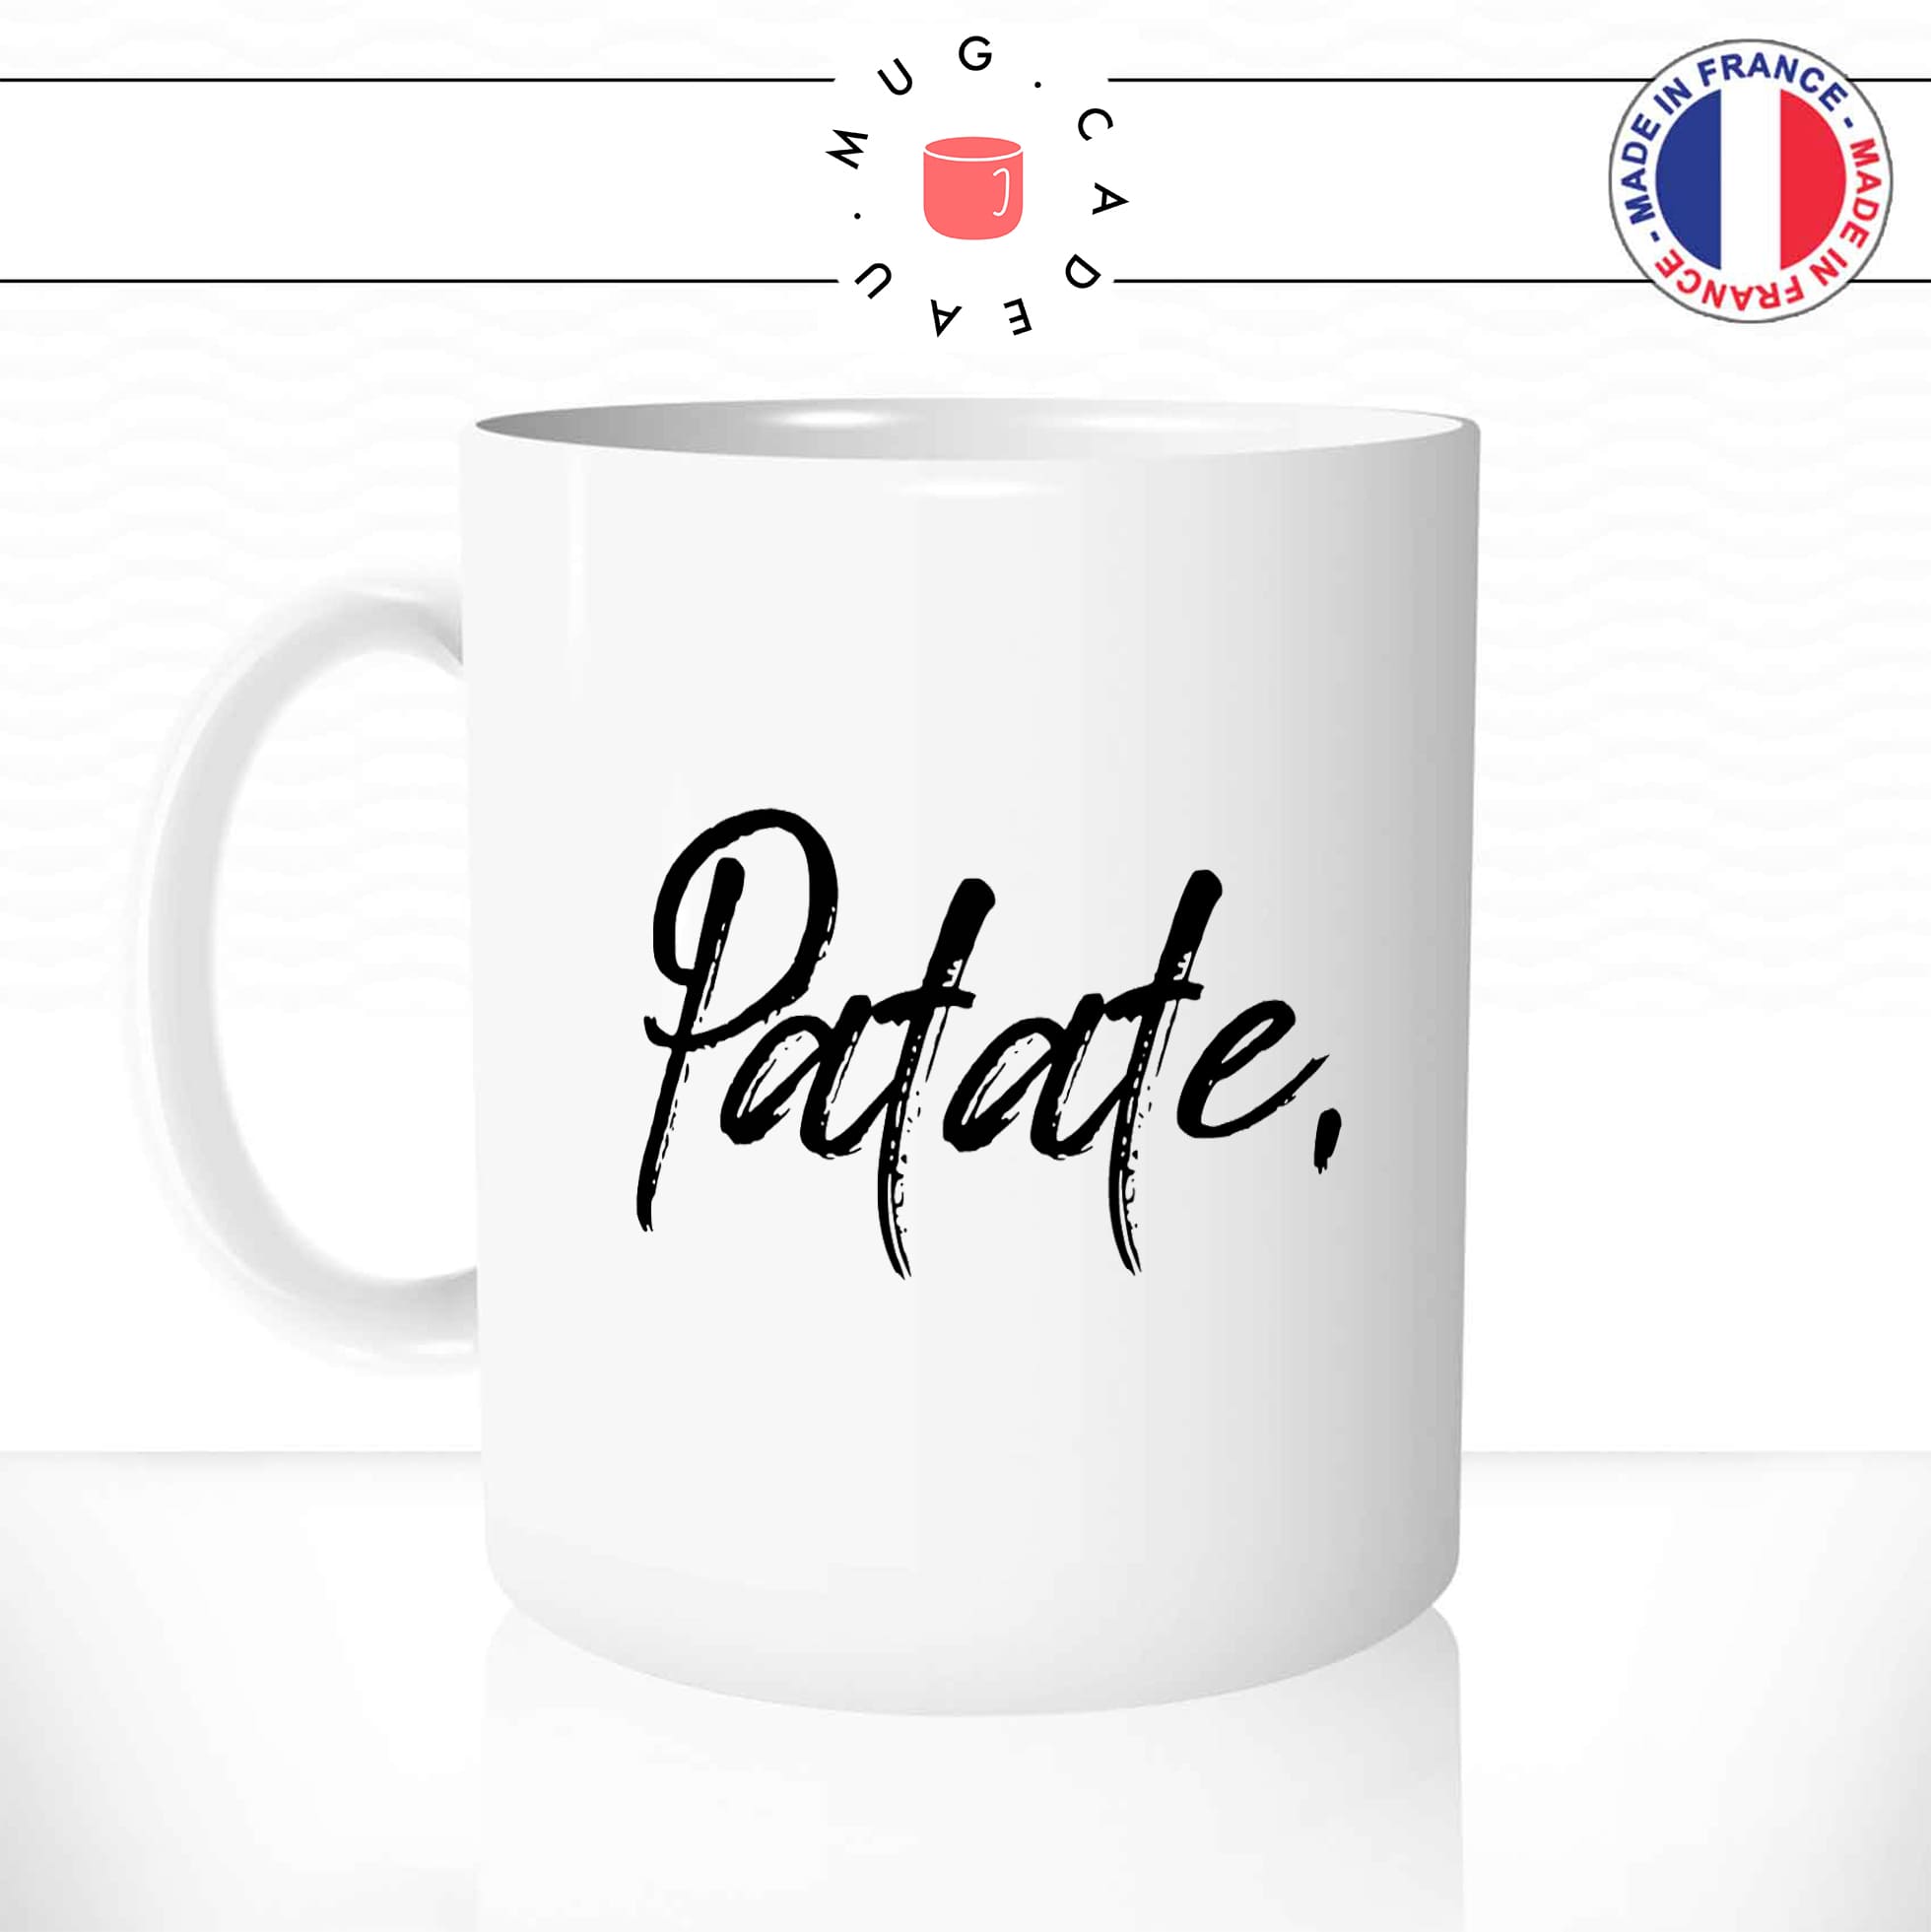 Mug Patate.